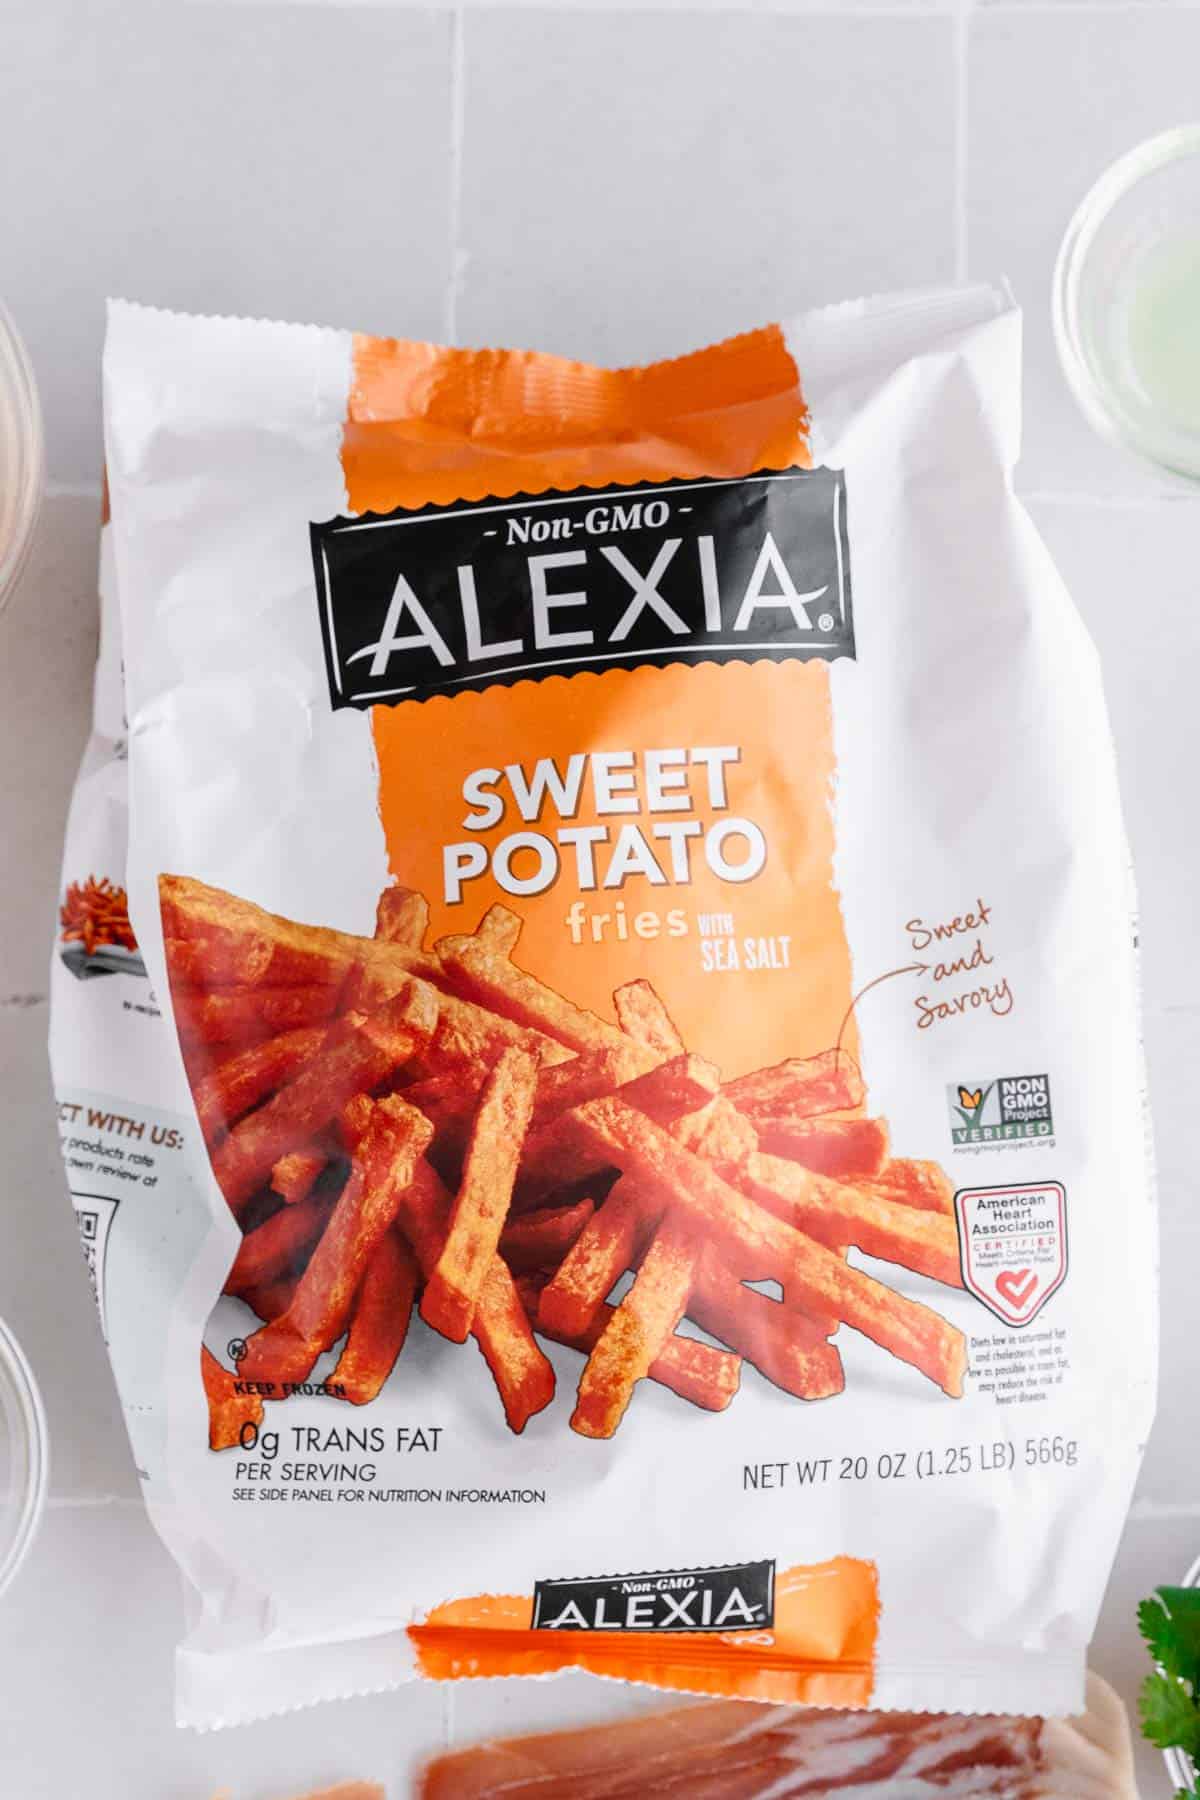 Alexia Sweet Potato Fries in a bag.